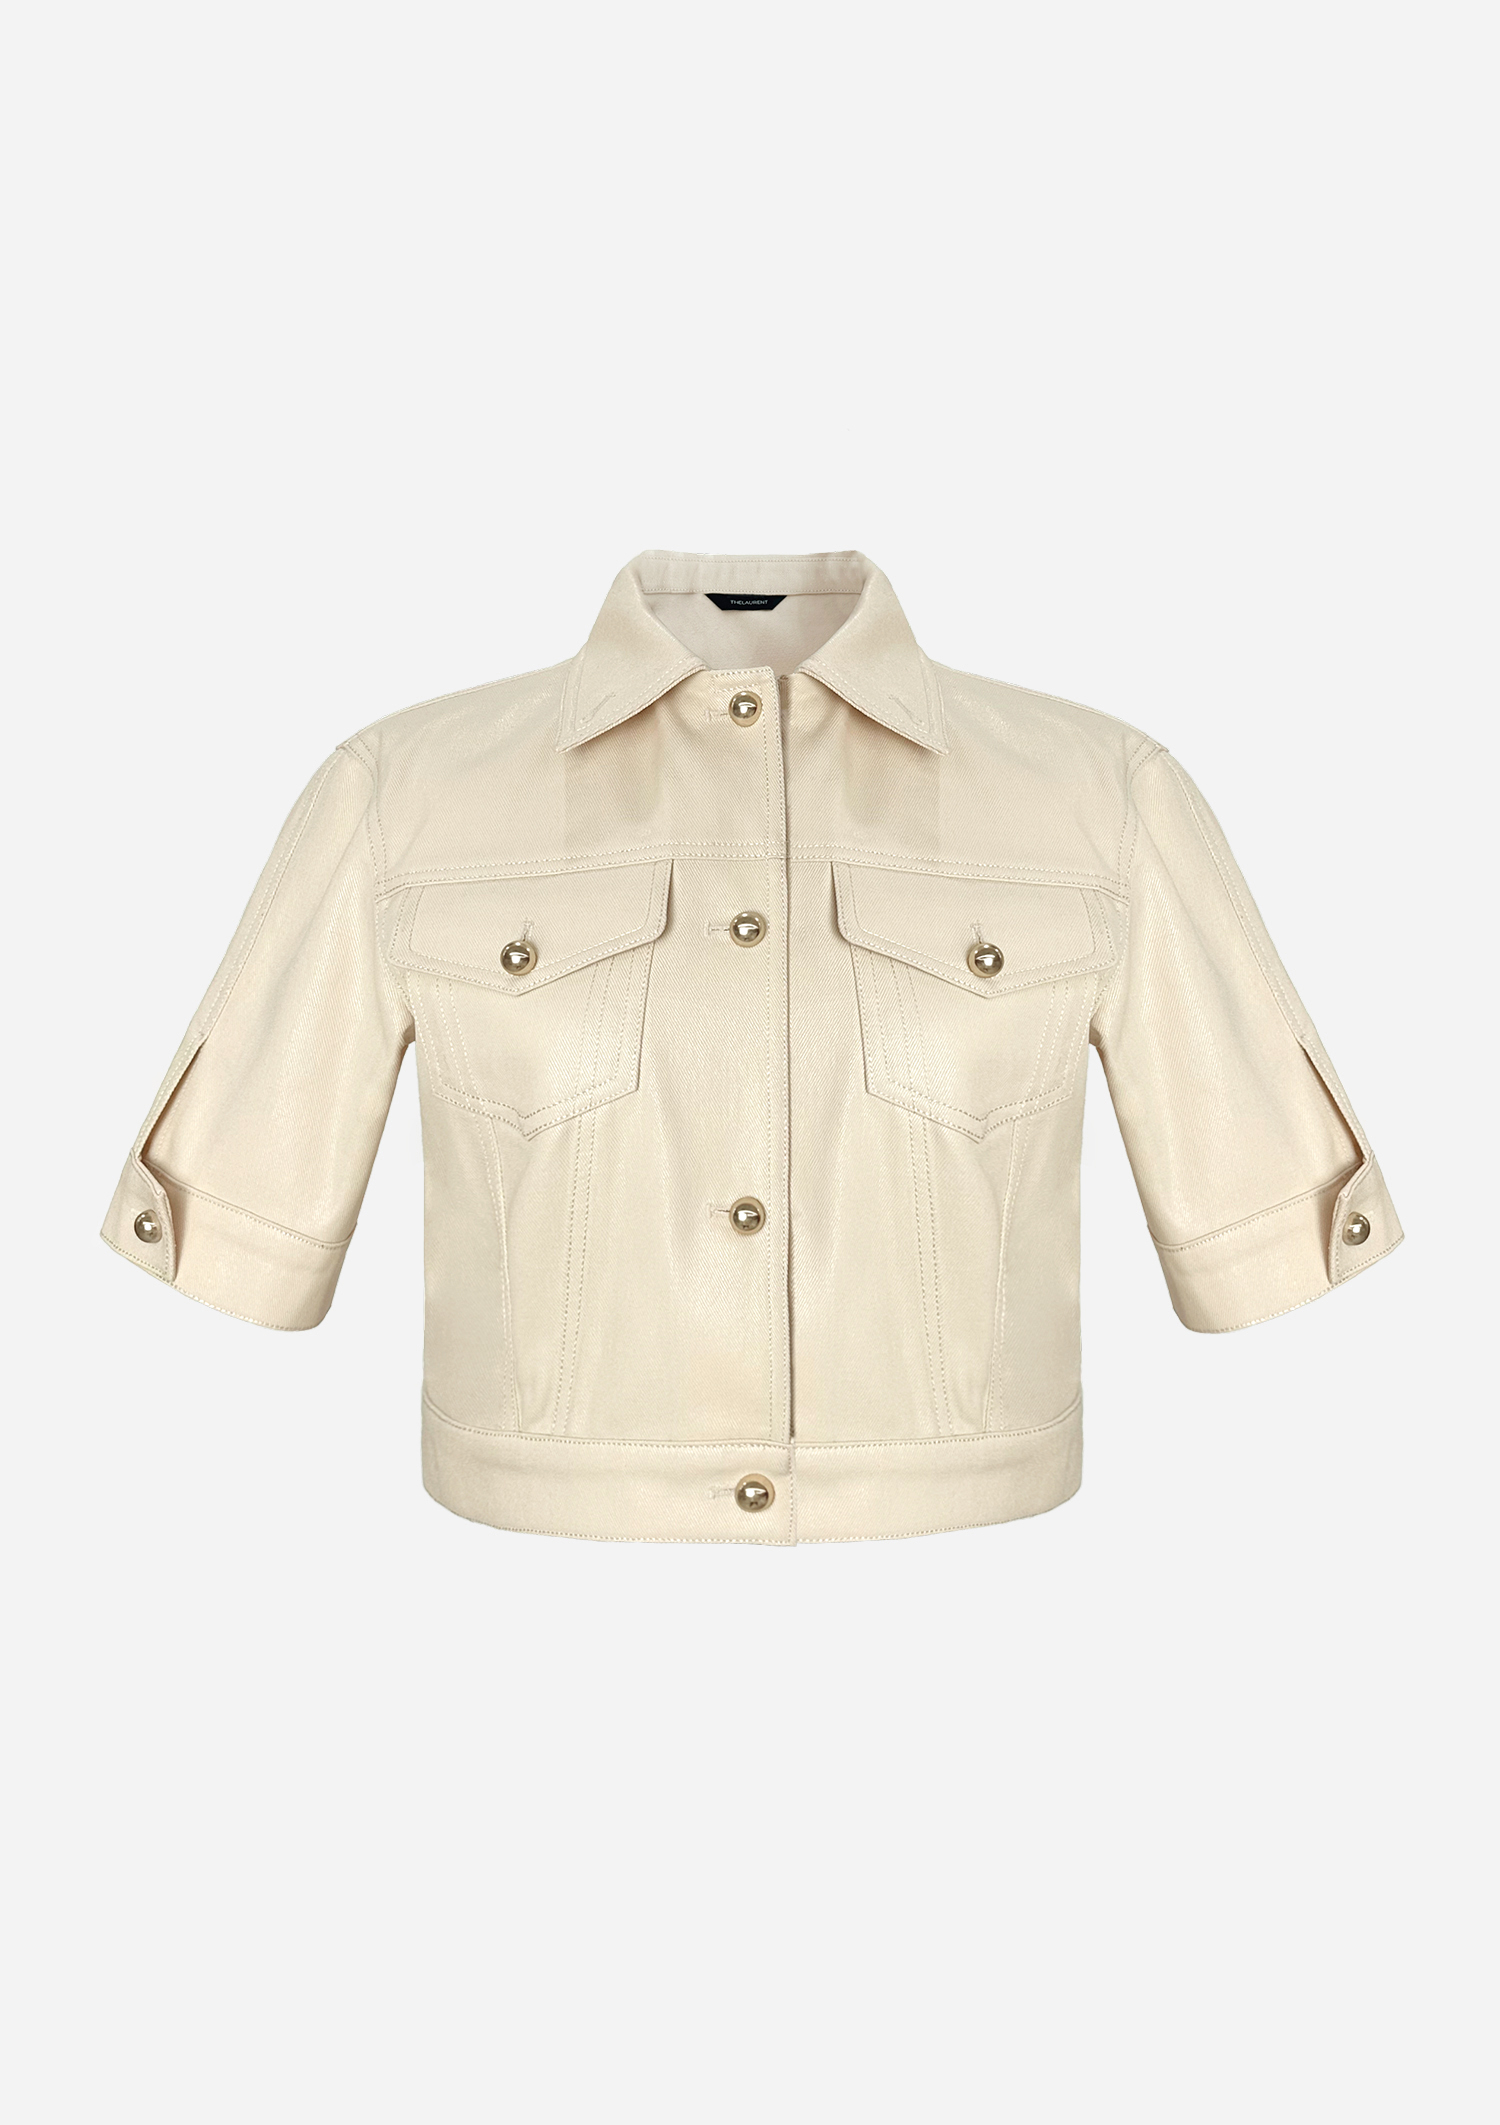 Stitched crop jacket - Vanilla coating